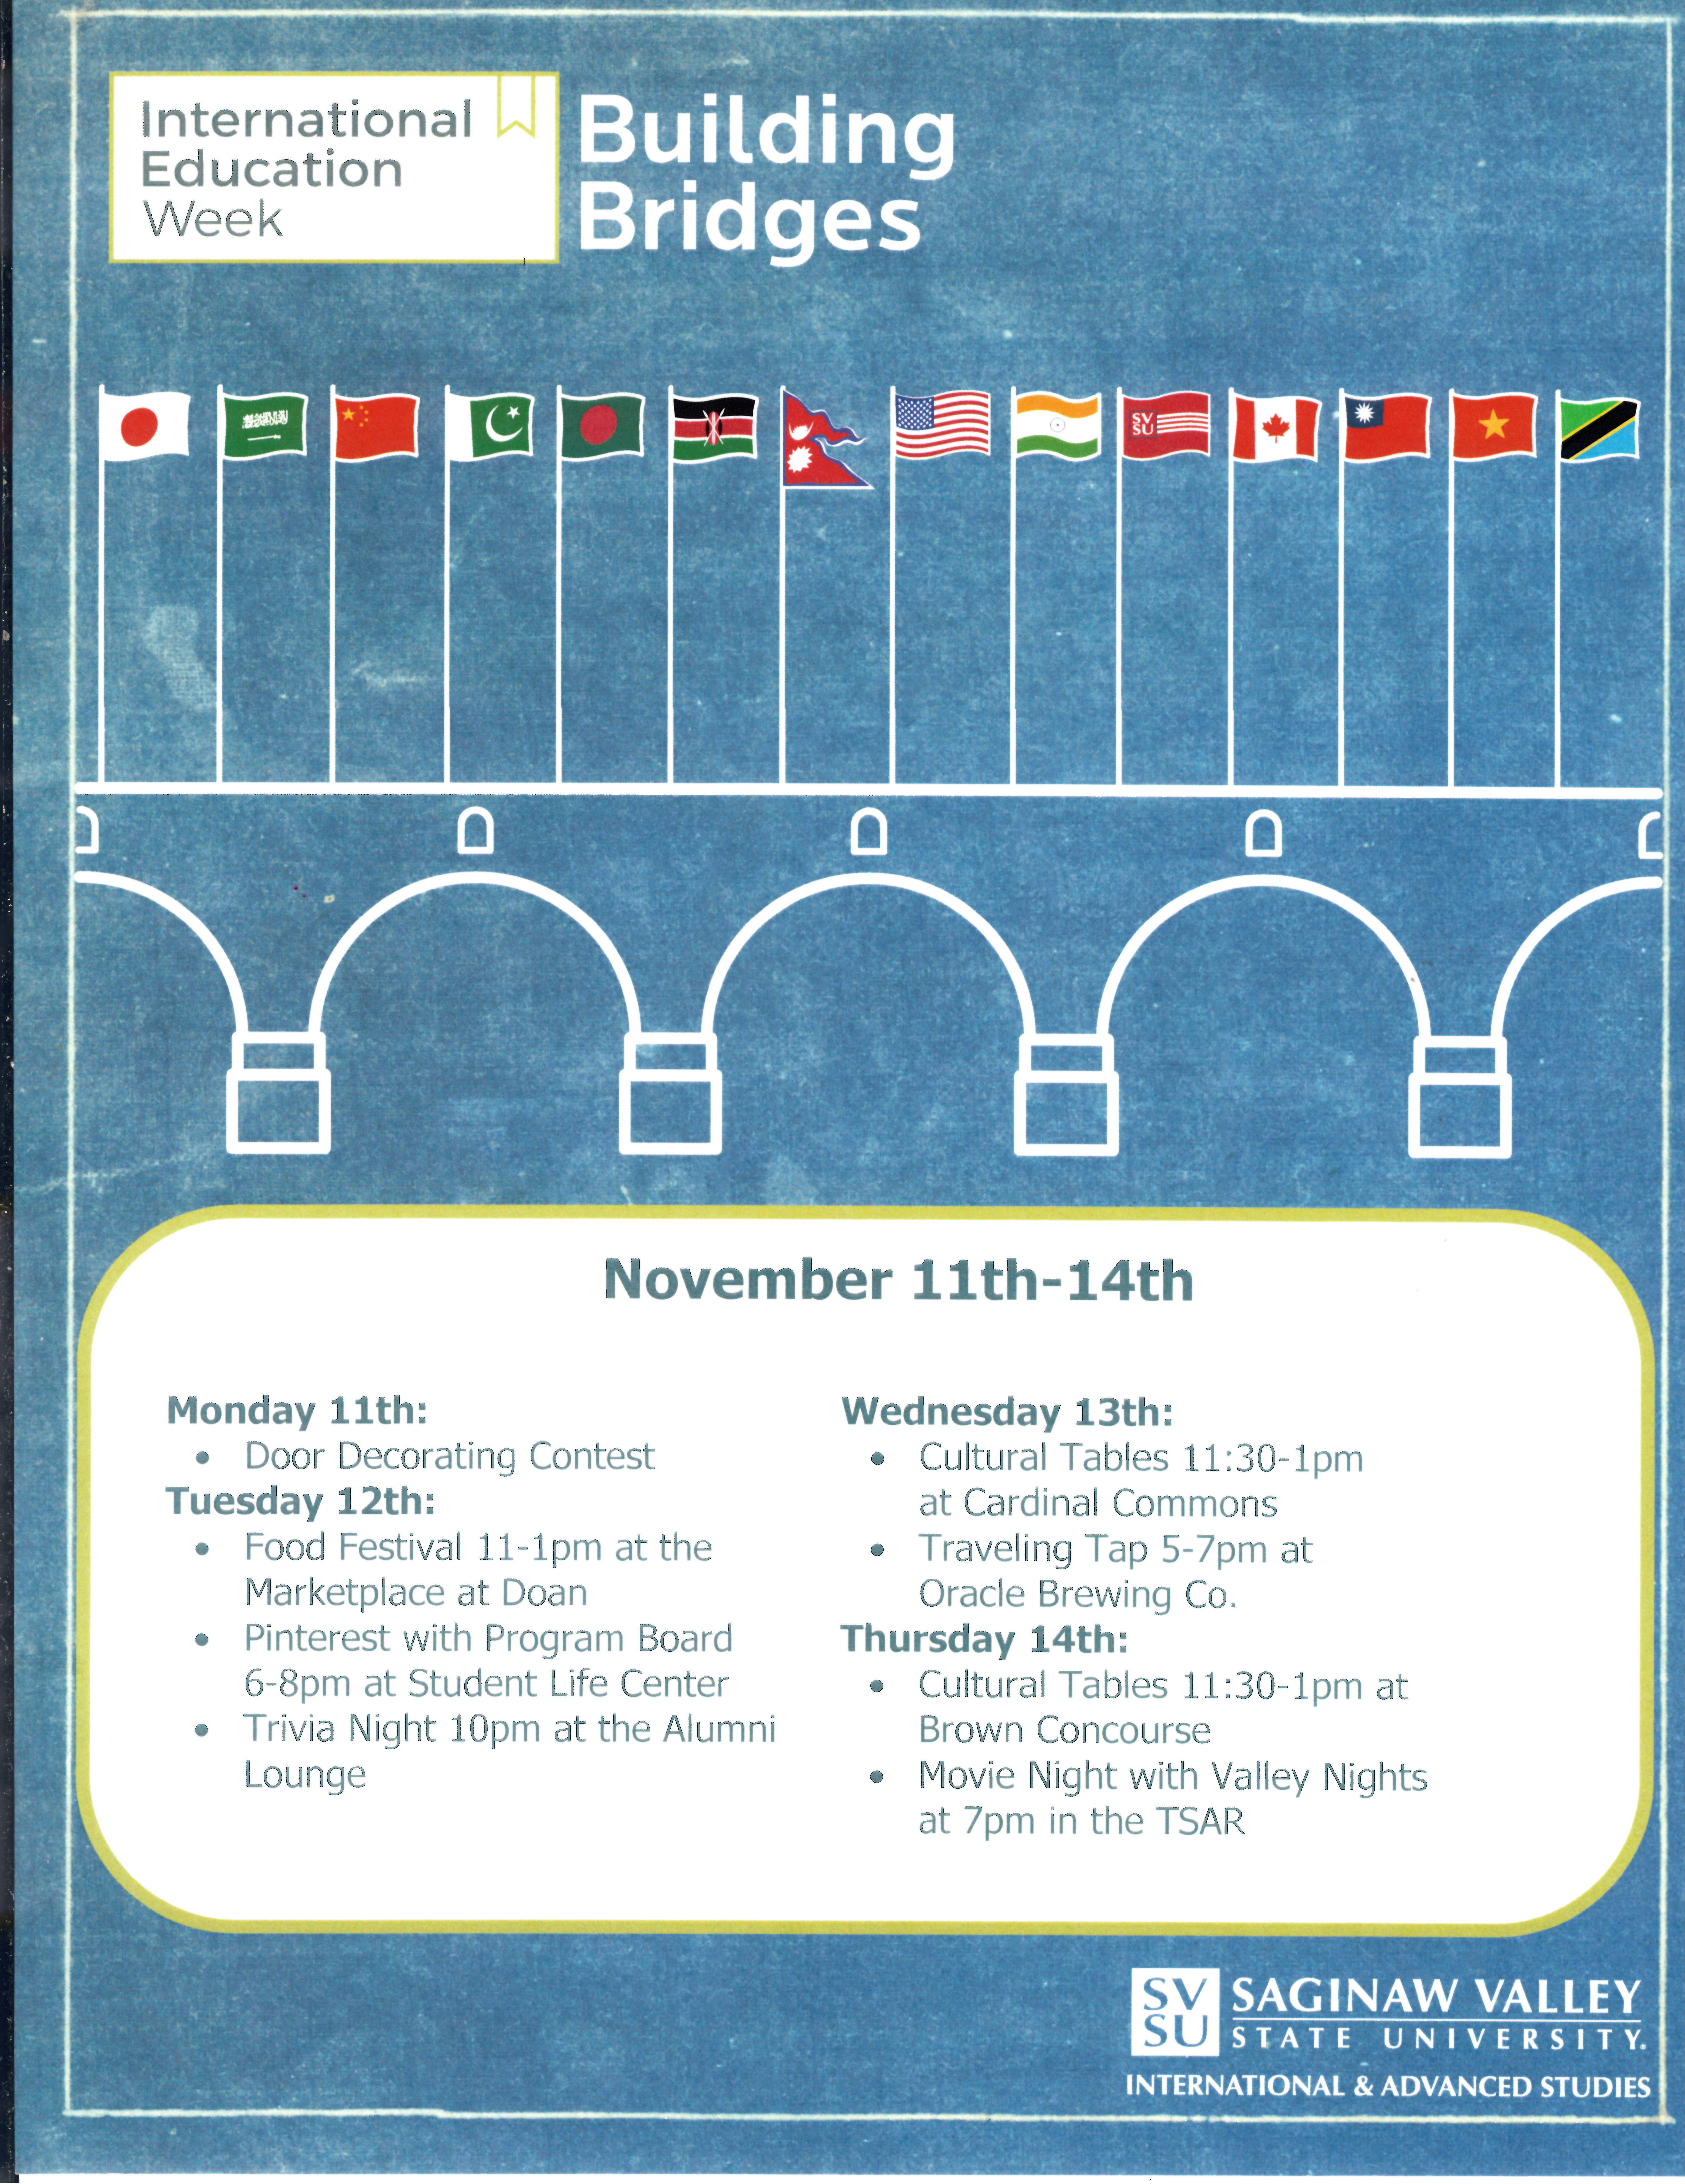 International Week on November 11 to 14